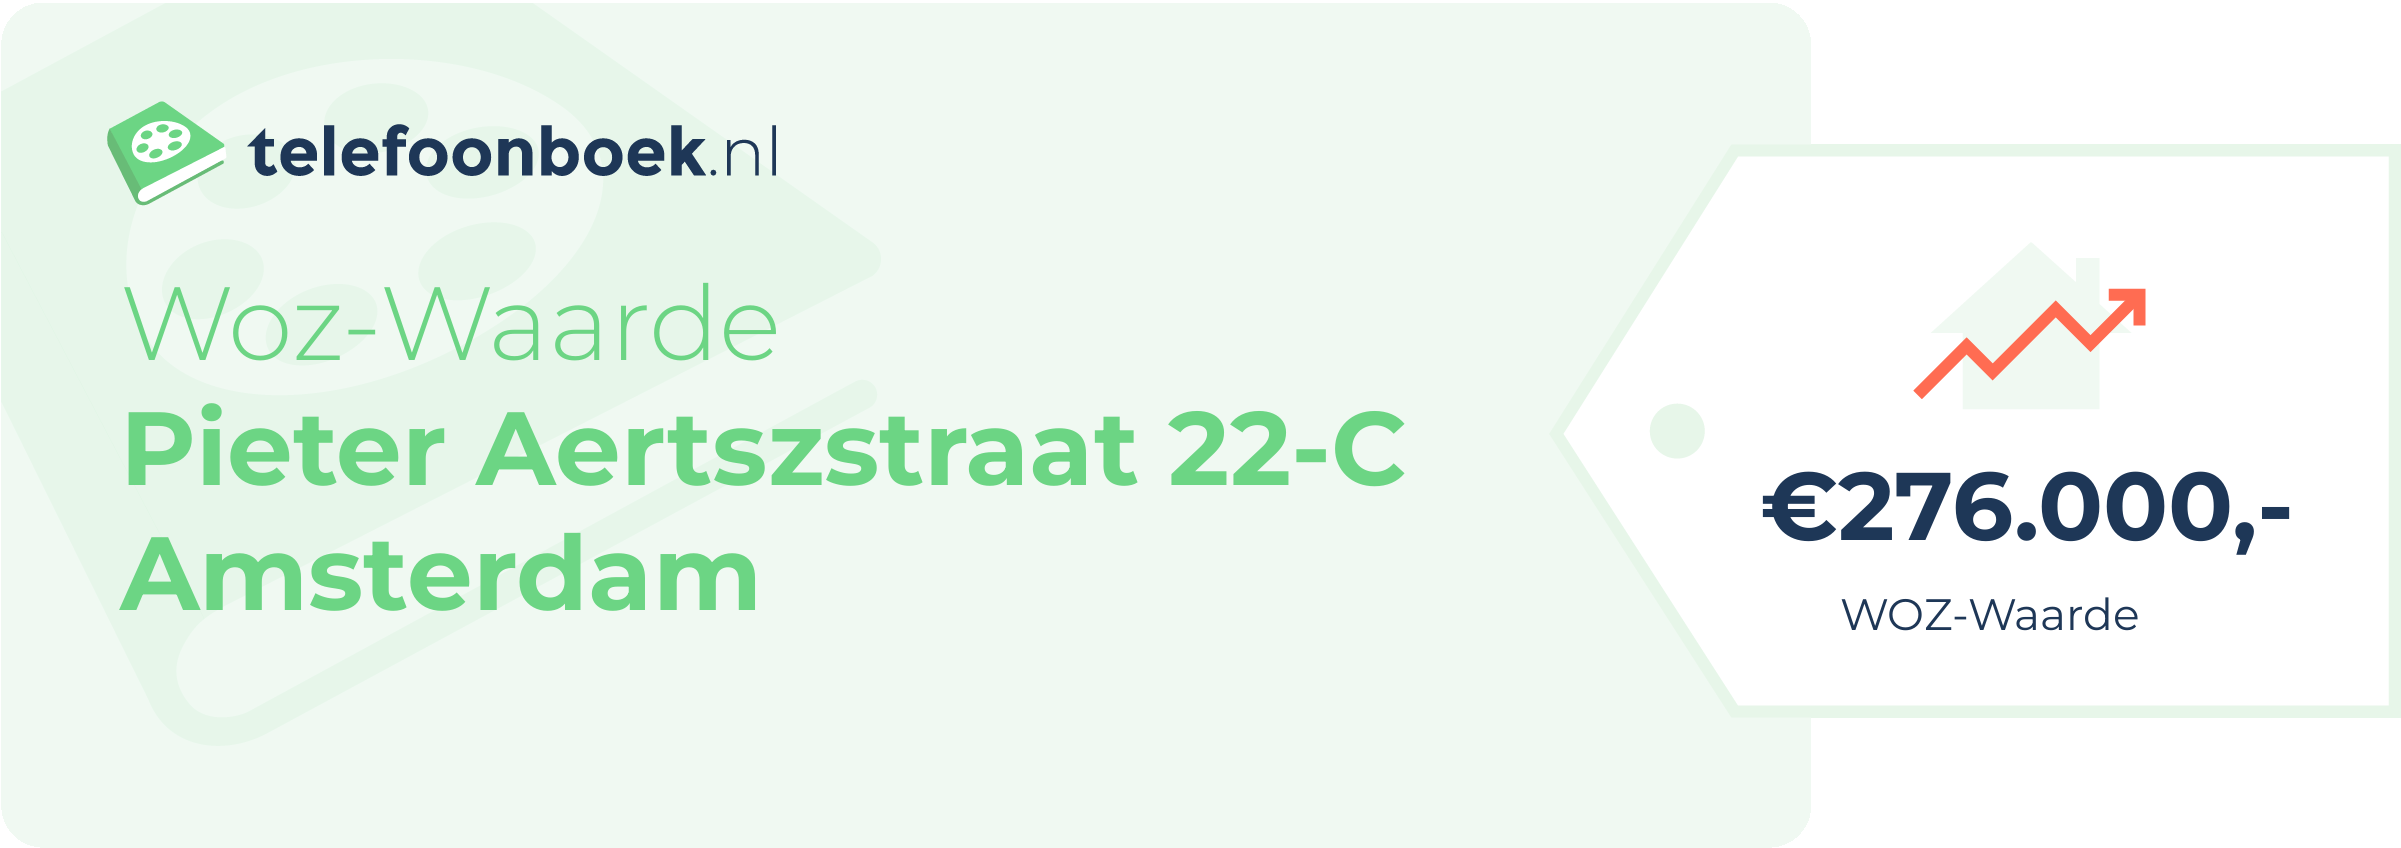 WOZ-waarde Pieter Aertszstraat 22-C Amsterdam